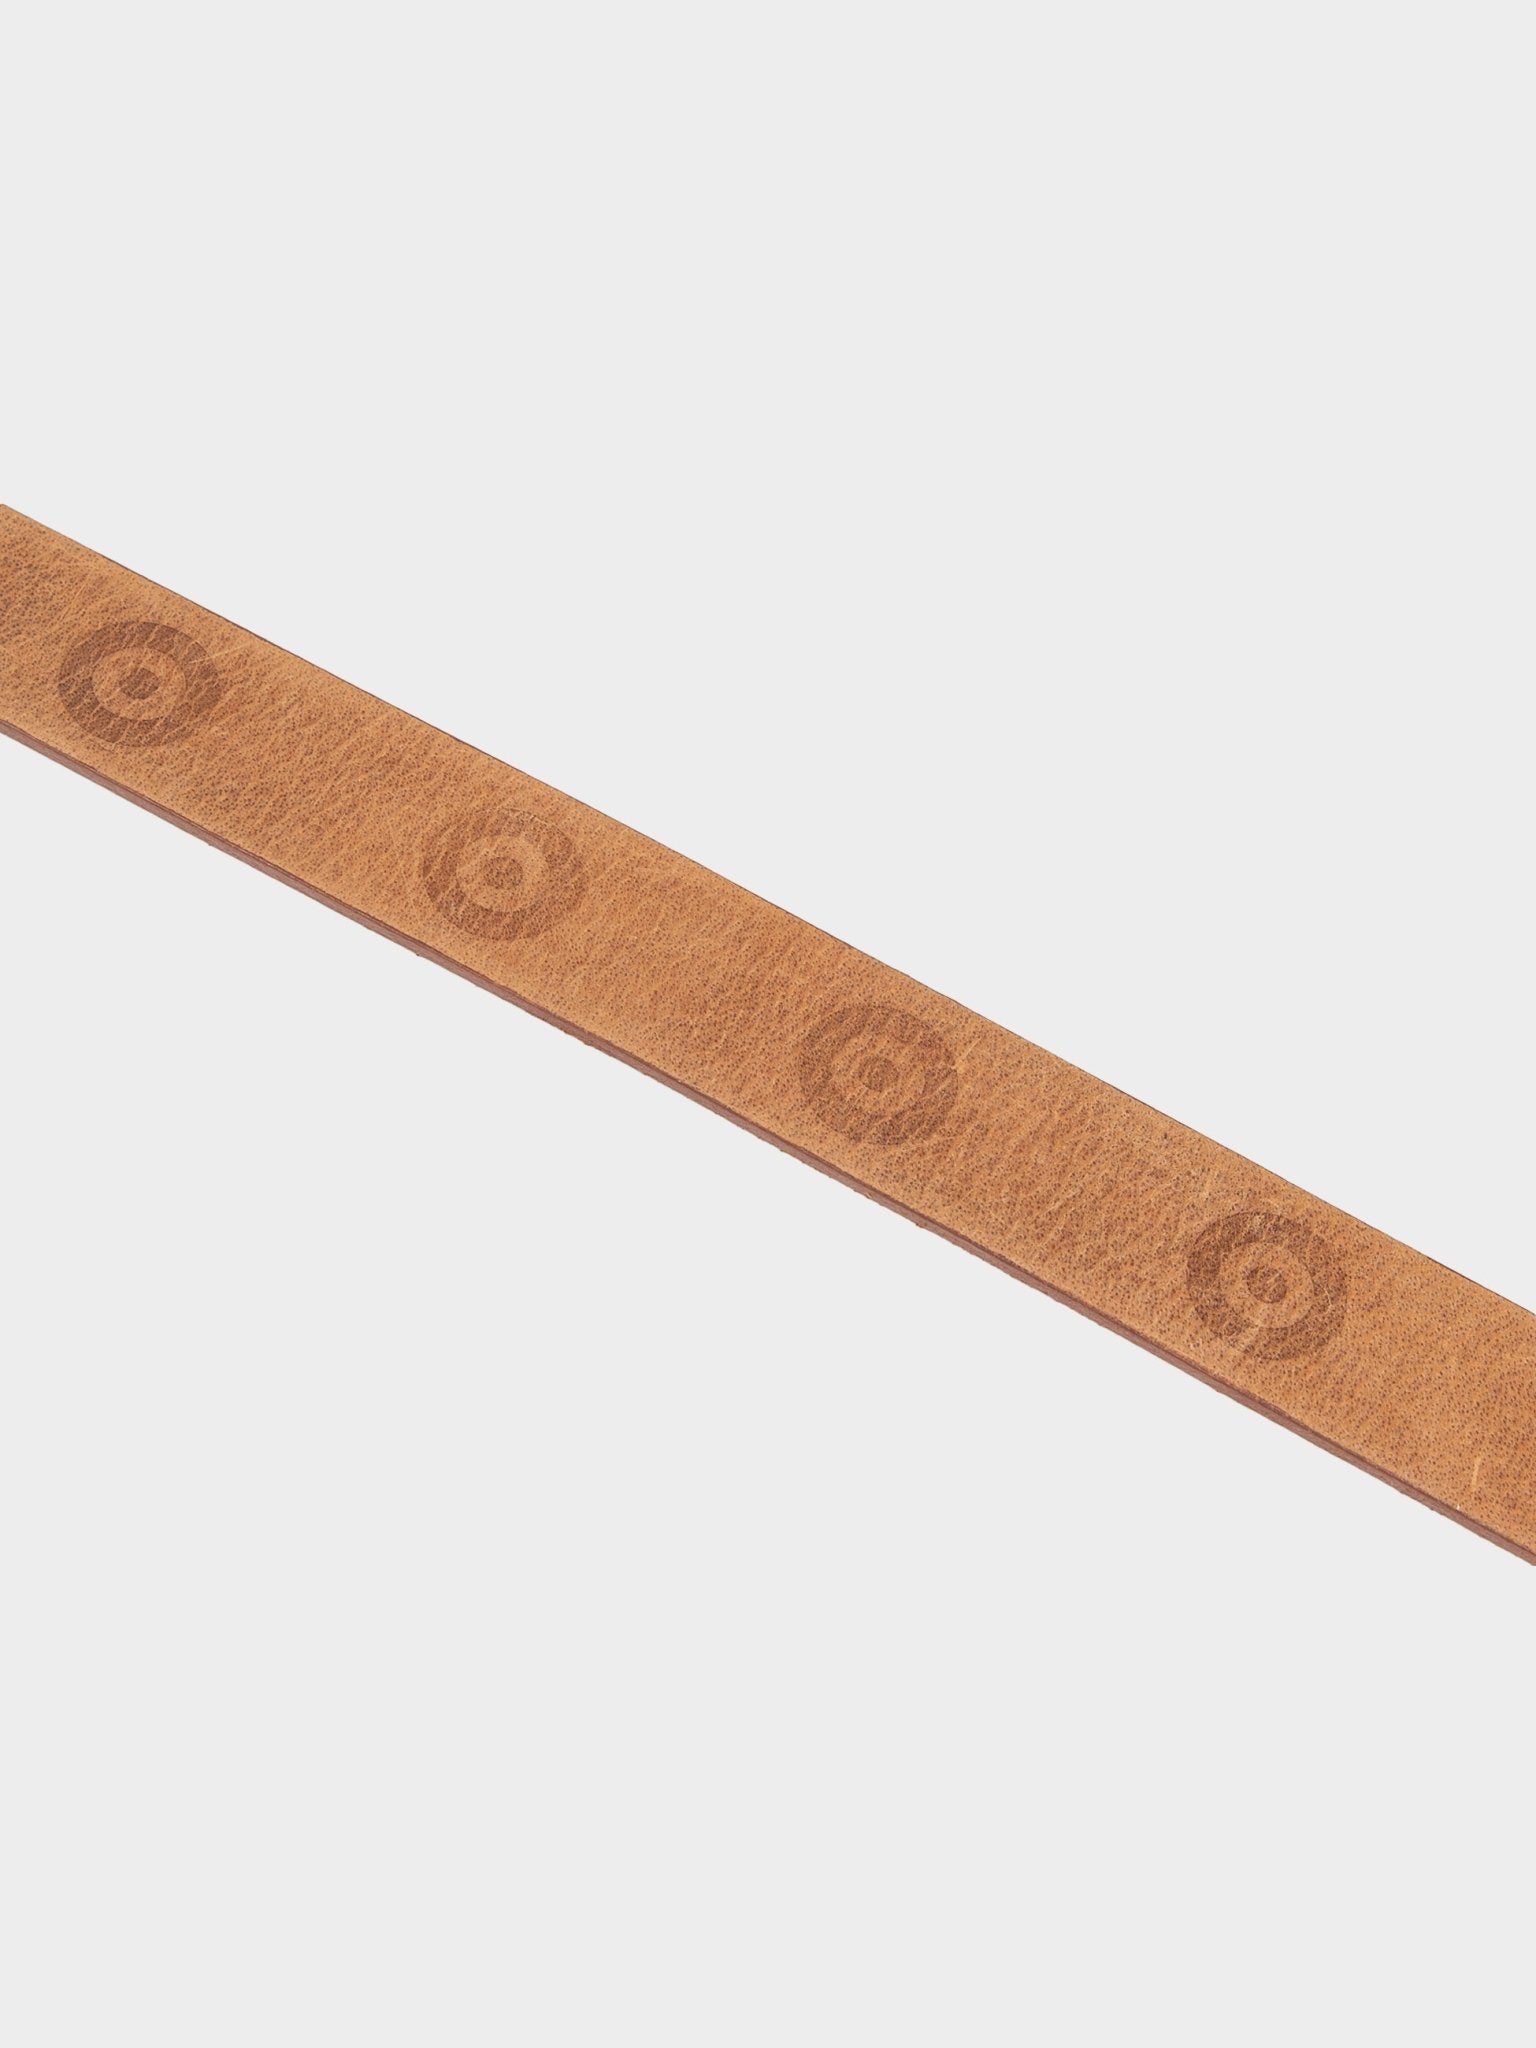 Target Embossed Belt (Leather) - Tan